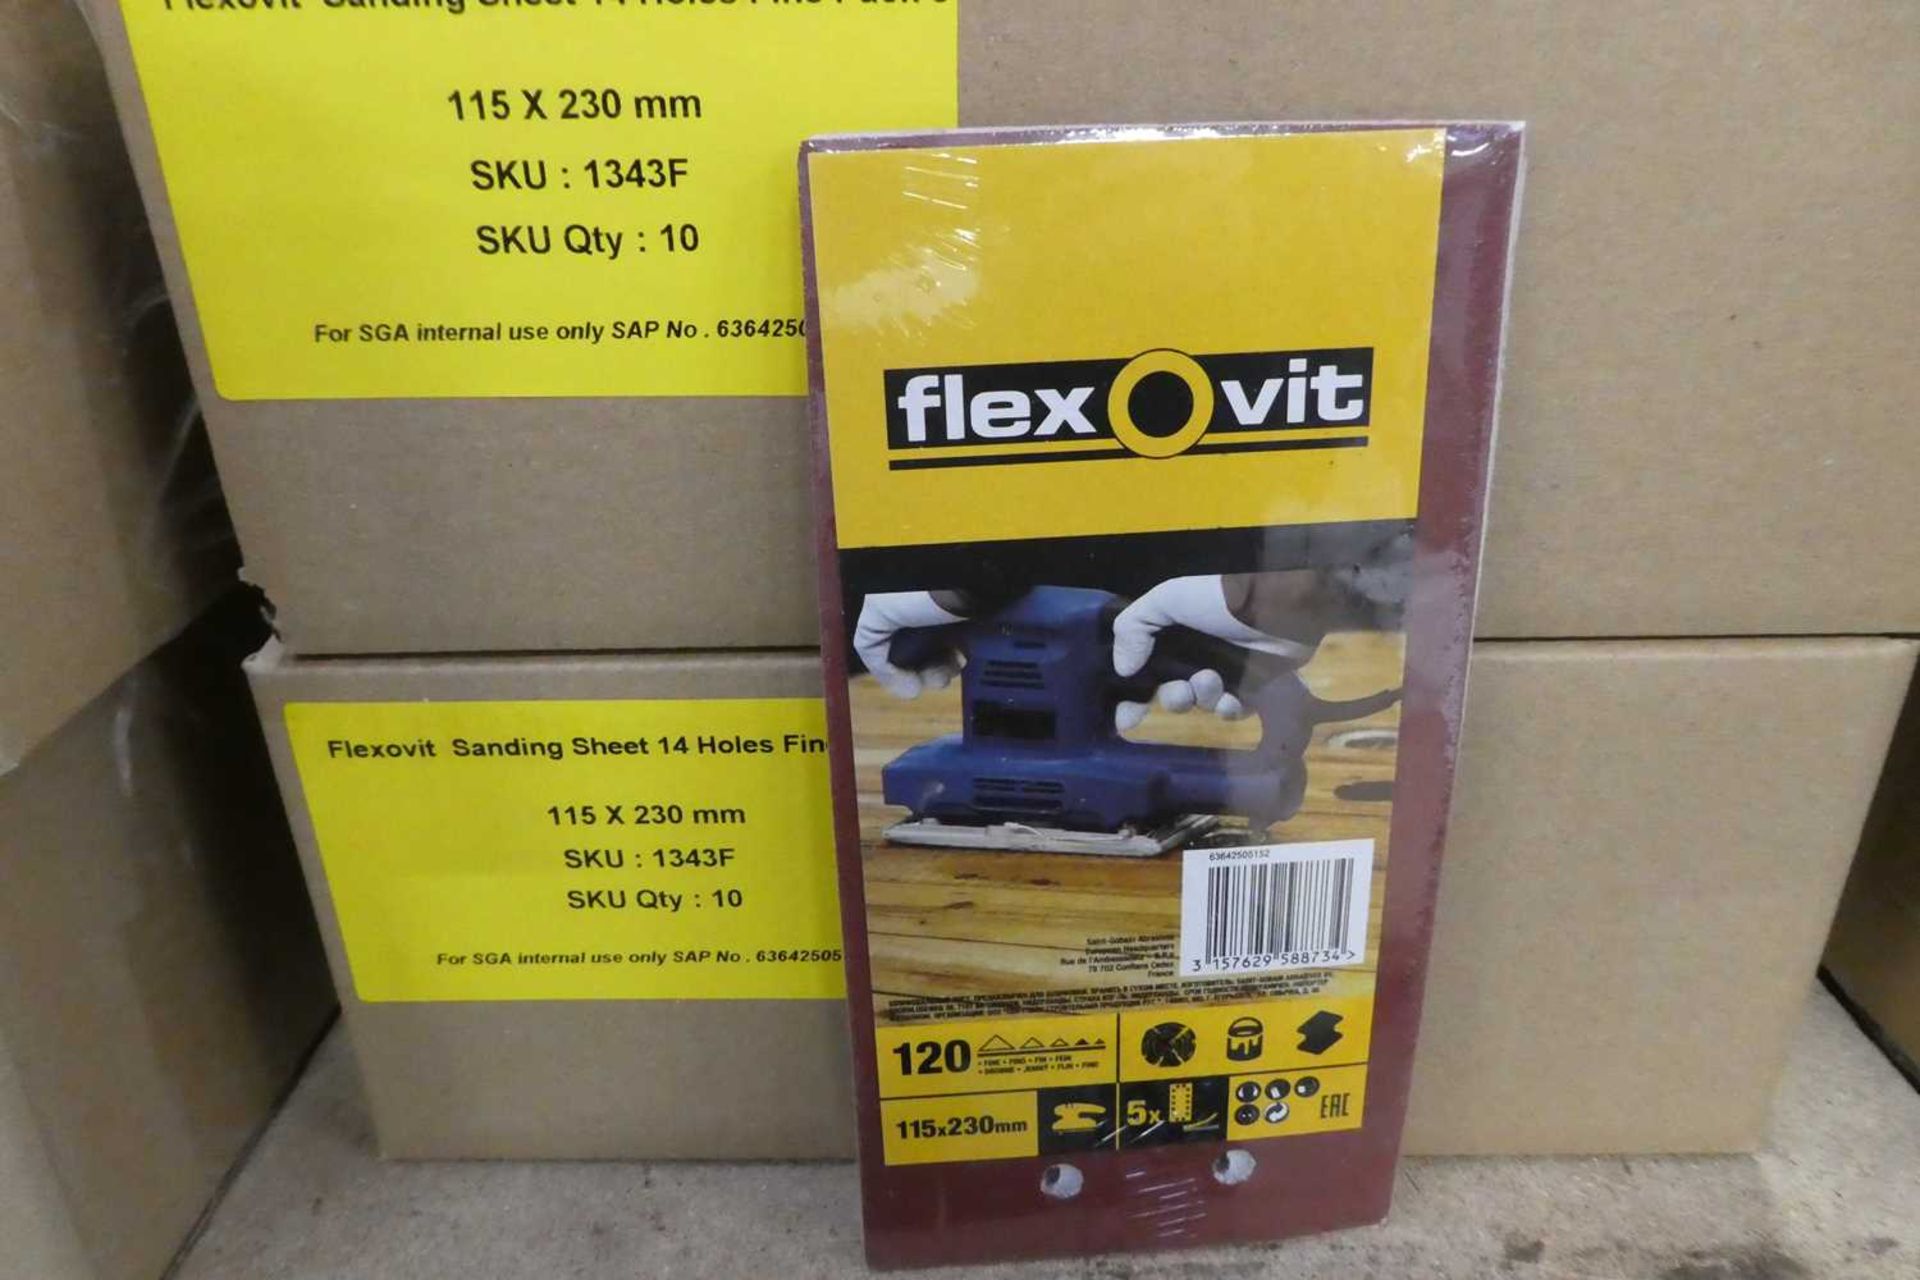 +VAT 4 boxes containing 10 multipacks of 5 Flexovit 14 hole fine sanding sheets